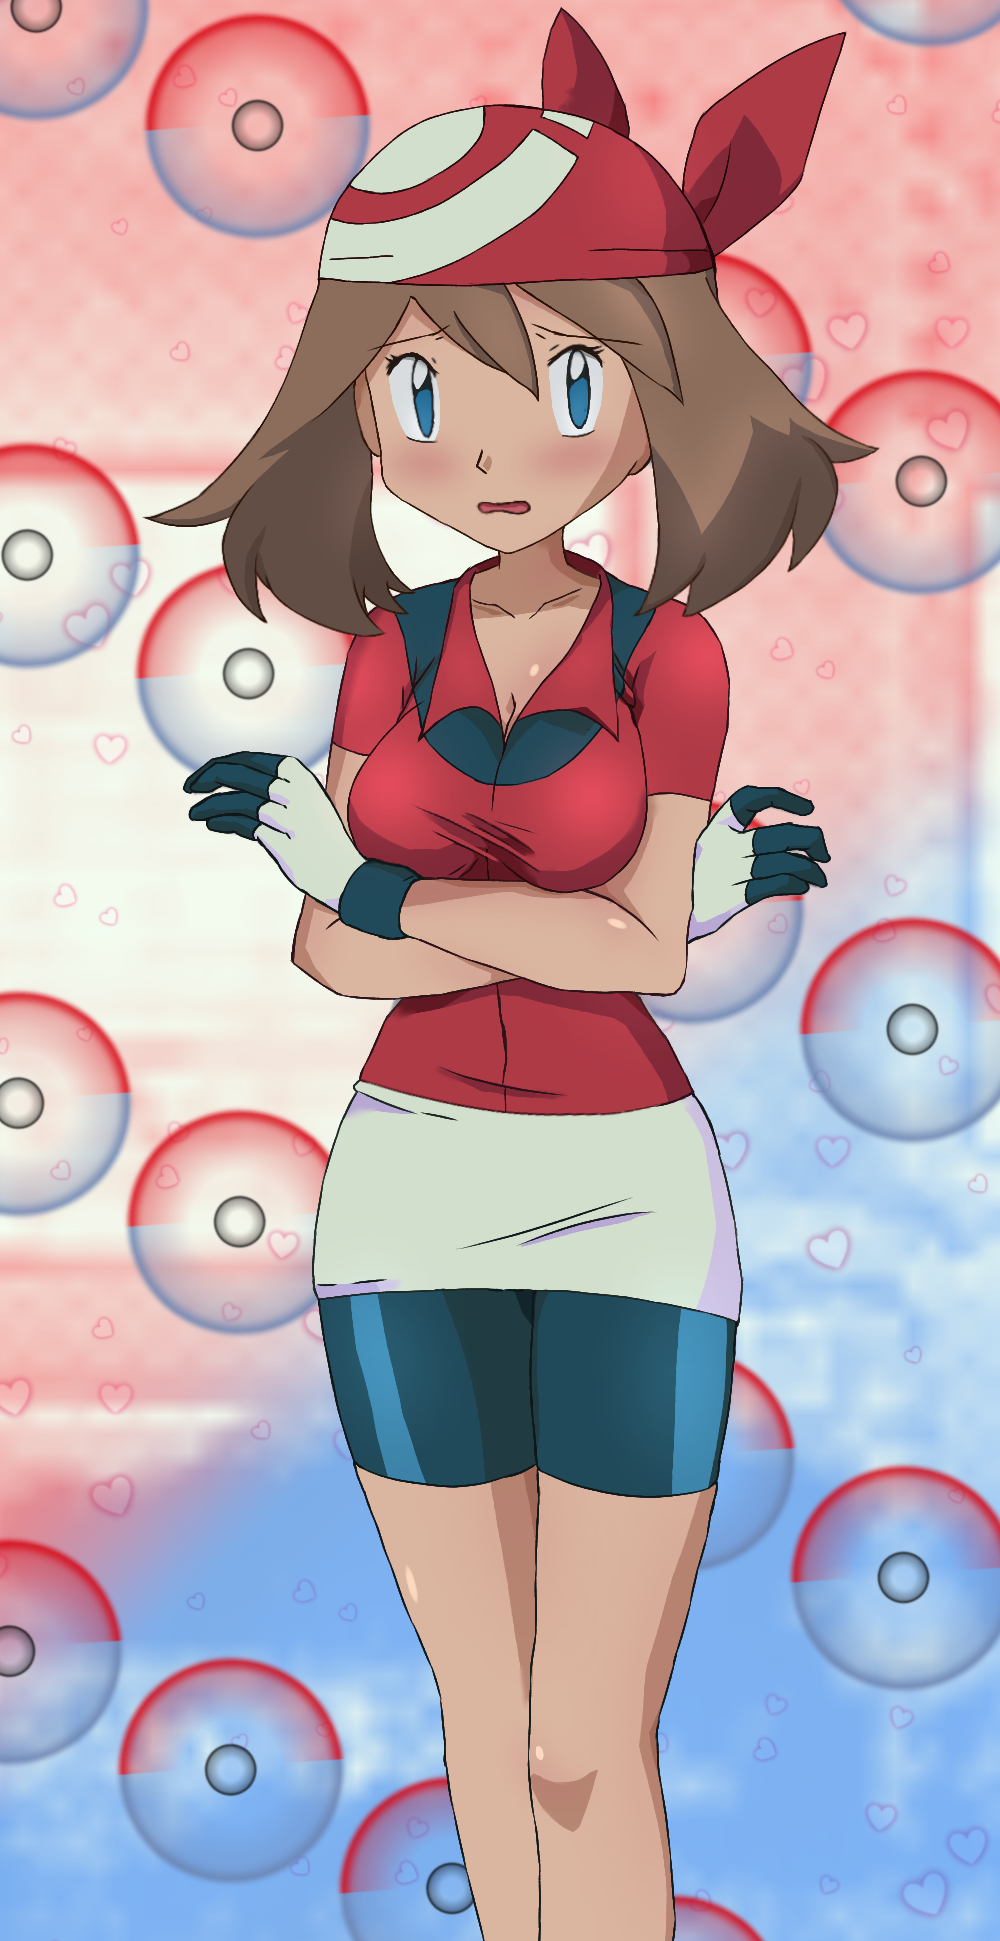 Anime 1000x1941 anime anime girls Pokémon May (Pokémon) twintails brunette solo artwork digital art fan art bonnet